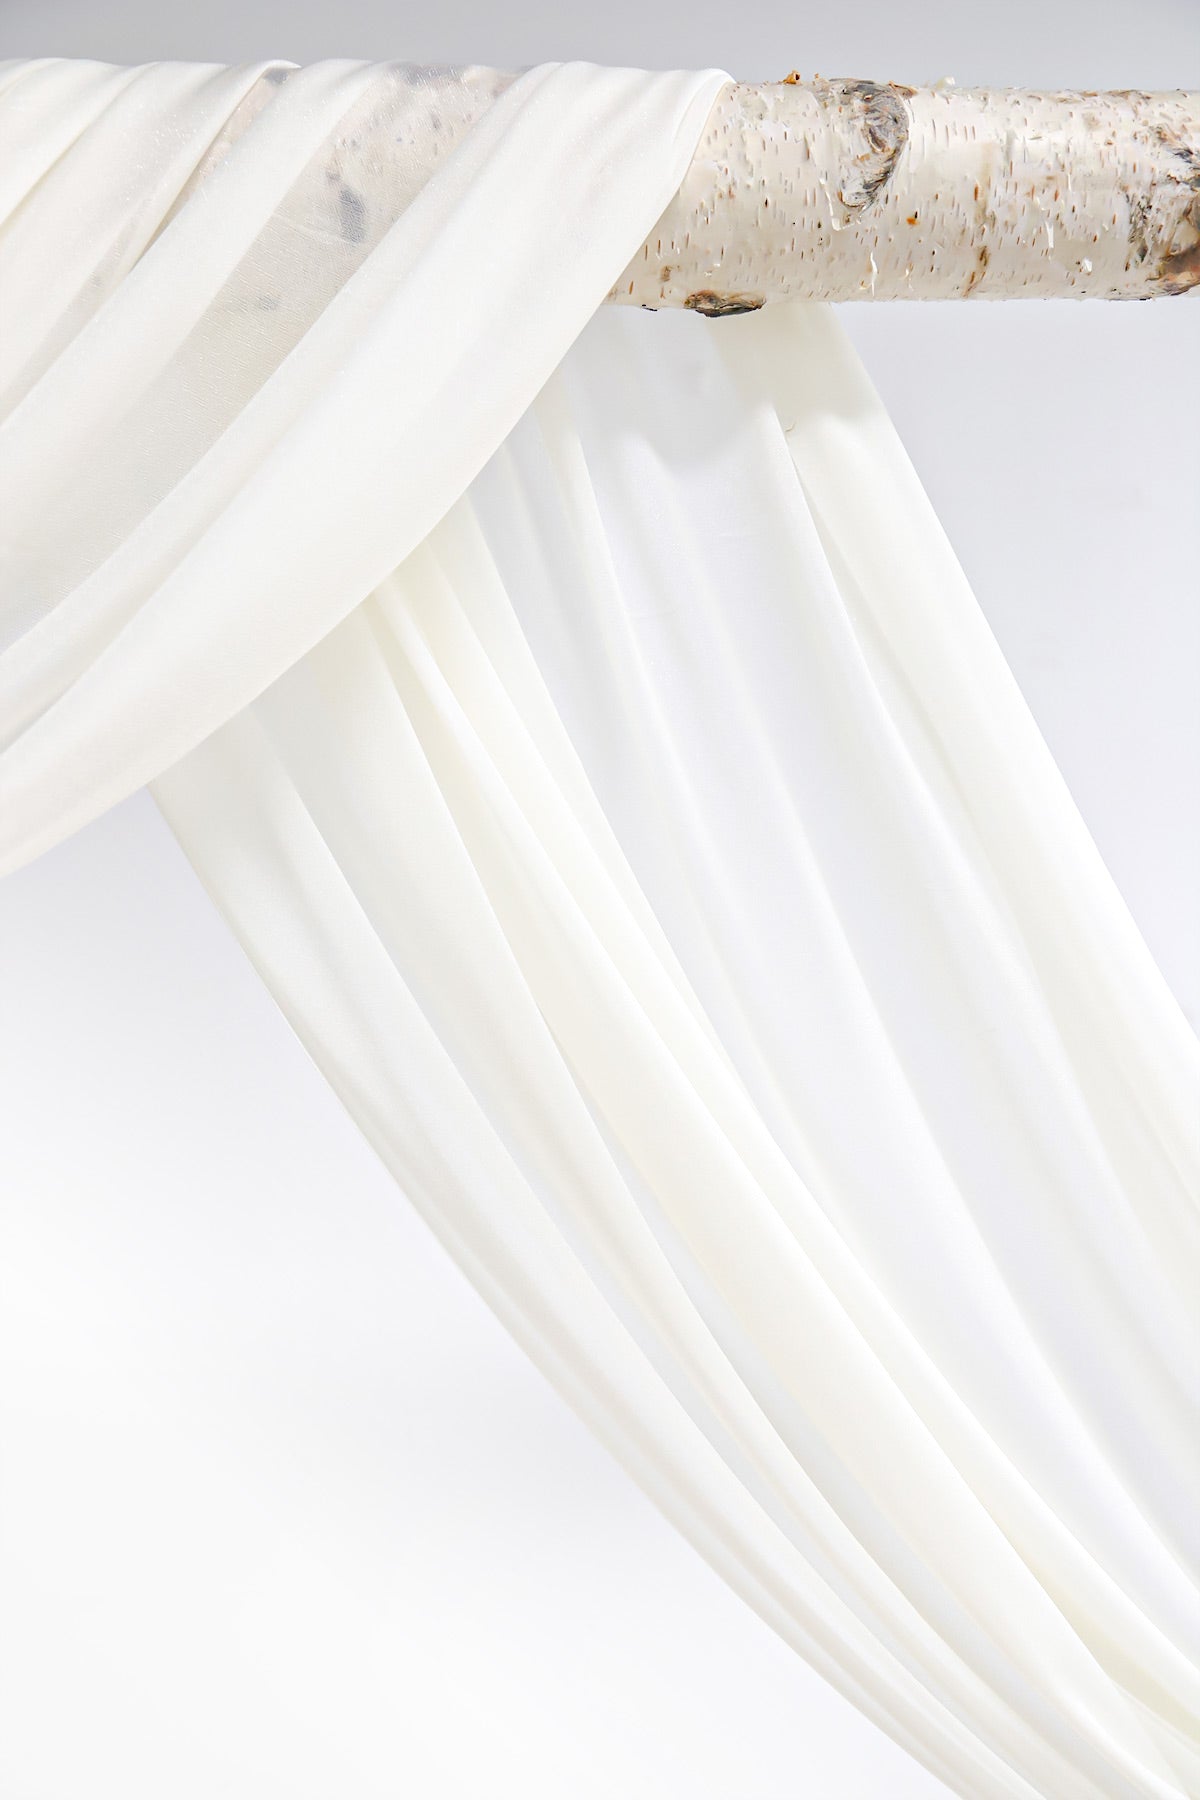 2 Pcs Rustic Wedding Arch Draping 29"w x 19.7ft - Romantic Ivory